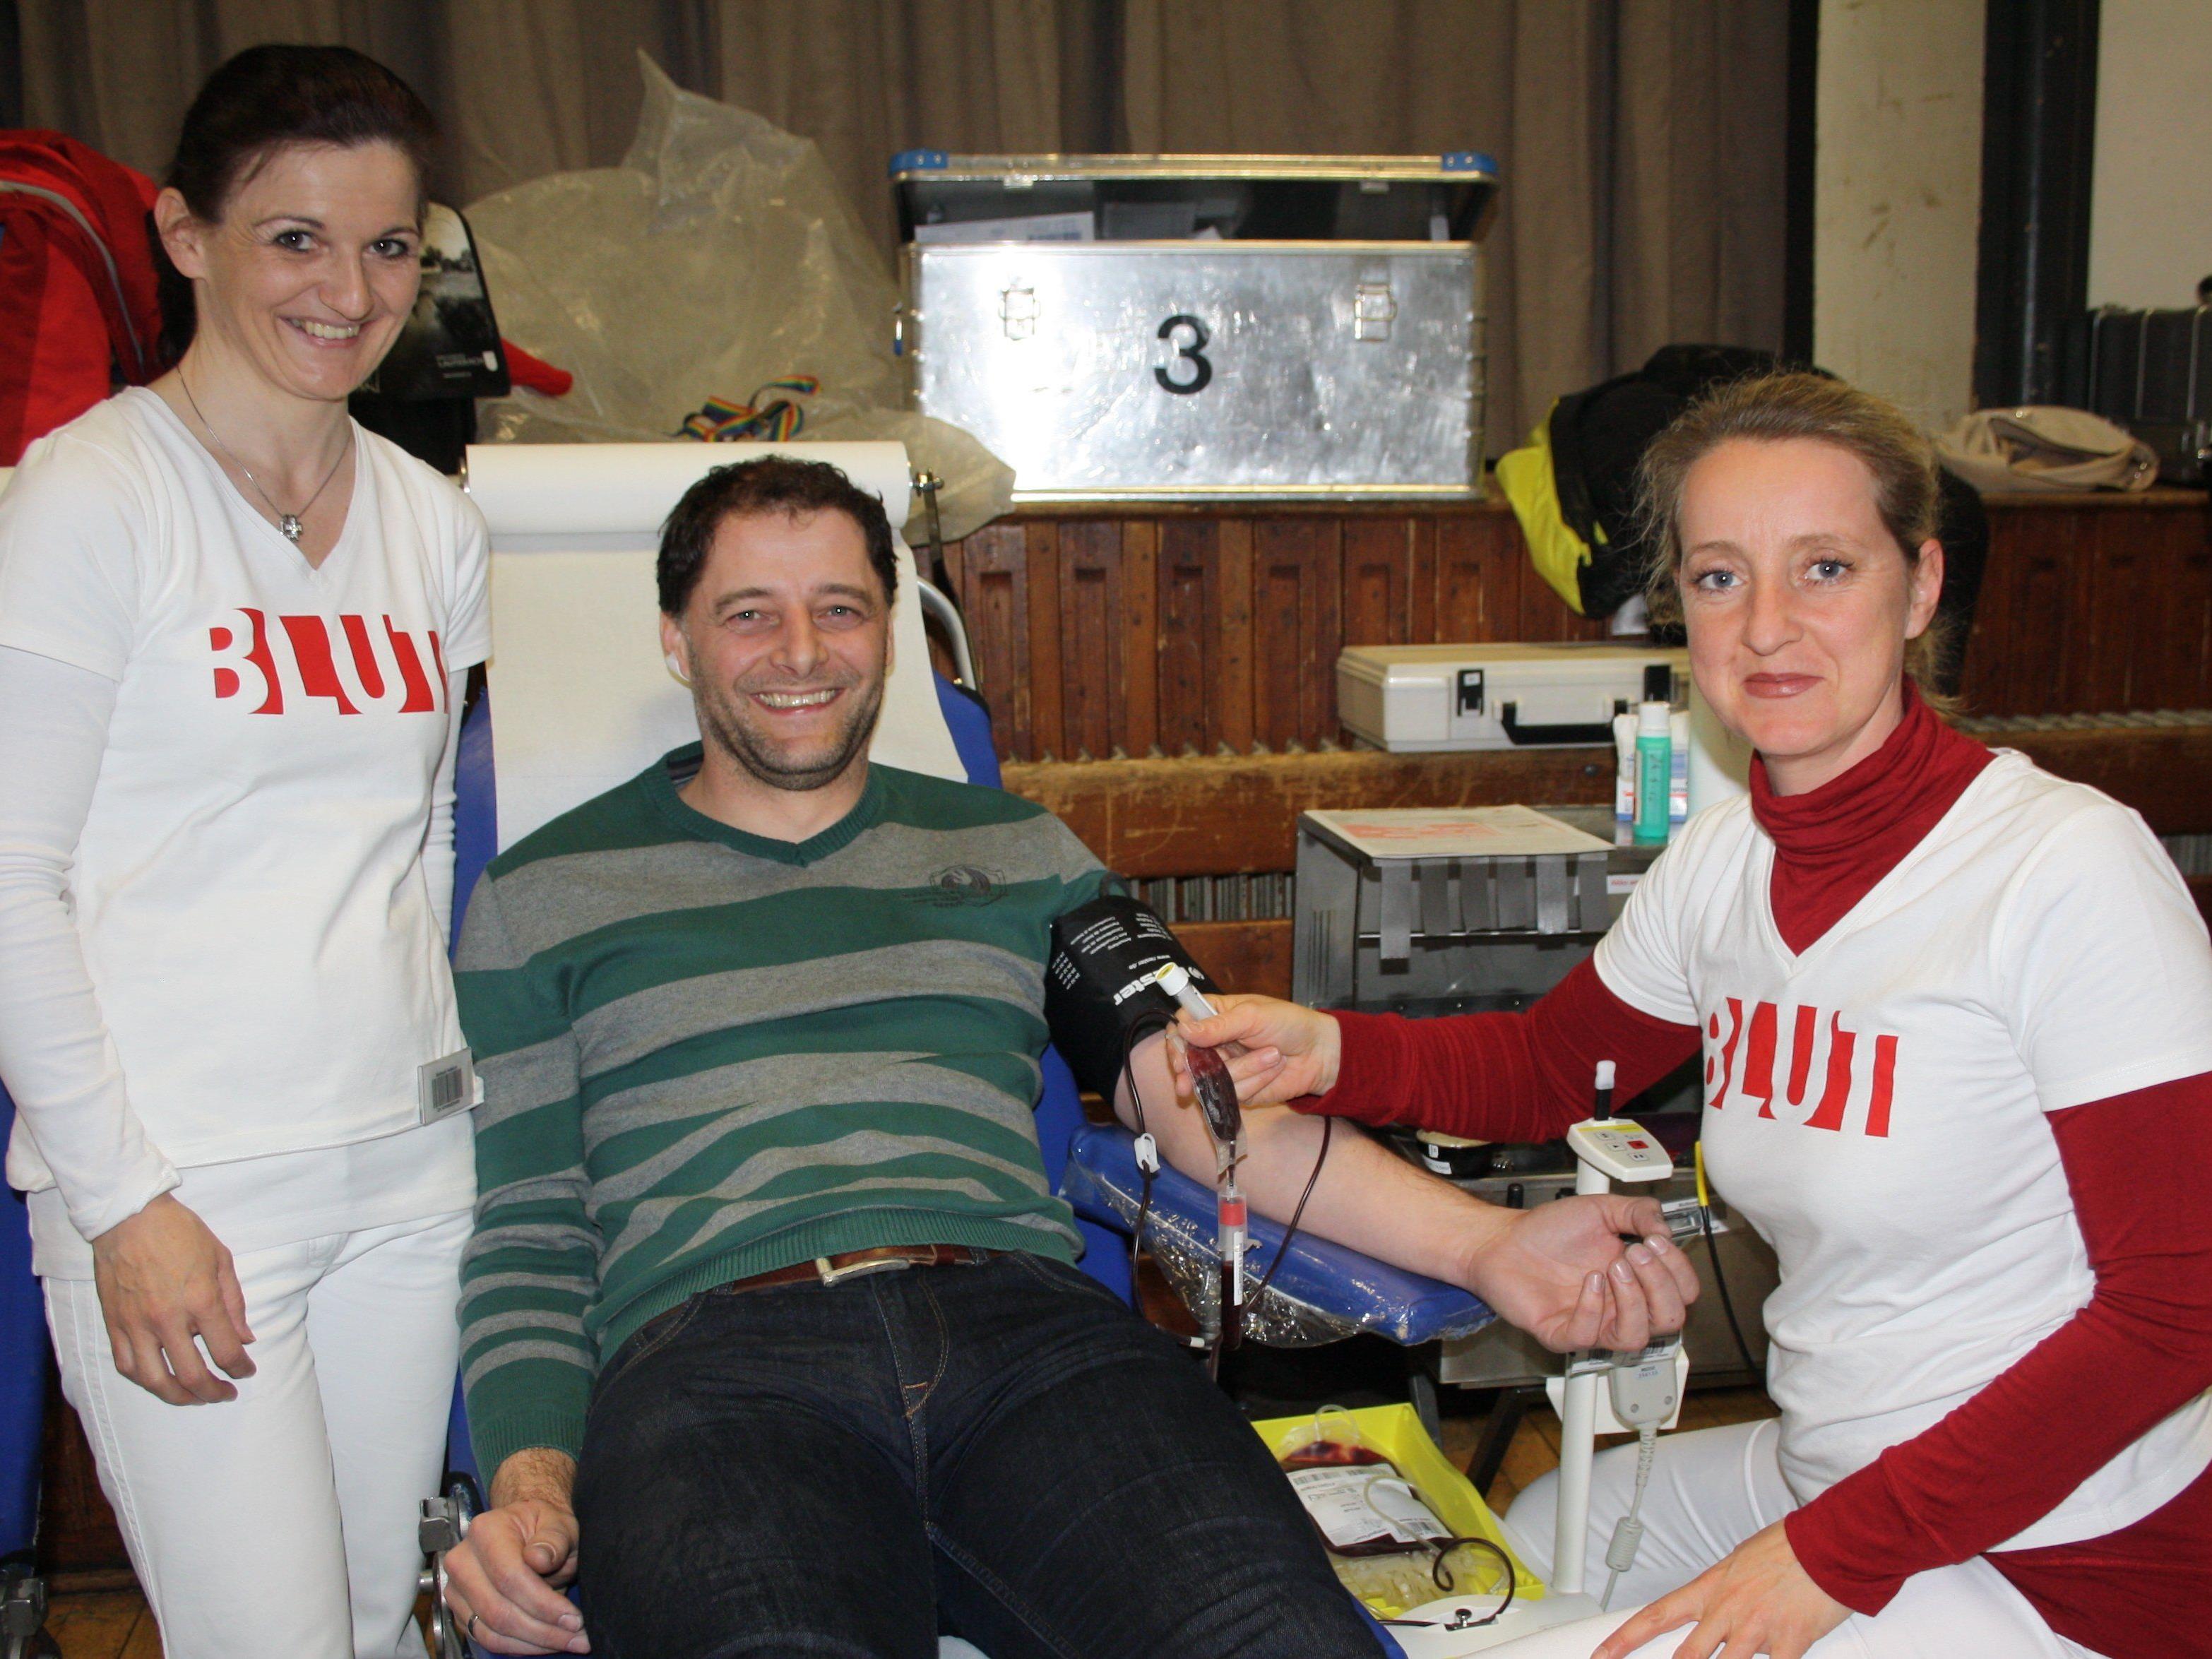 Blut spenden hilft Leben retten, so der Dank an alle freiwilligen Blutspender.